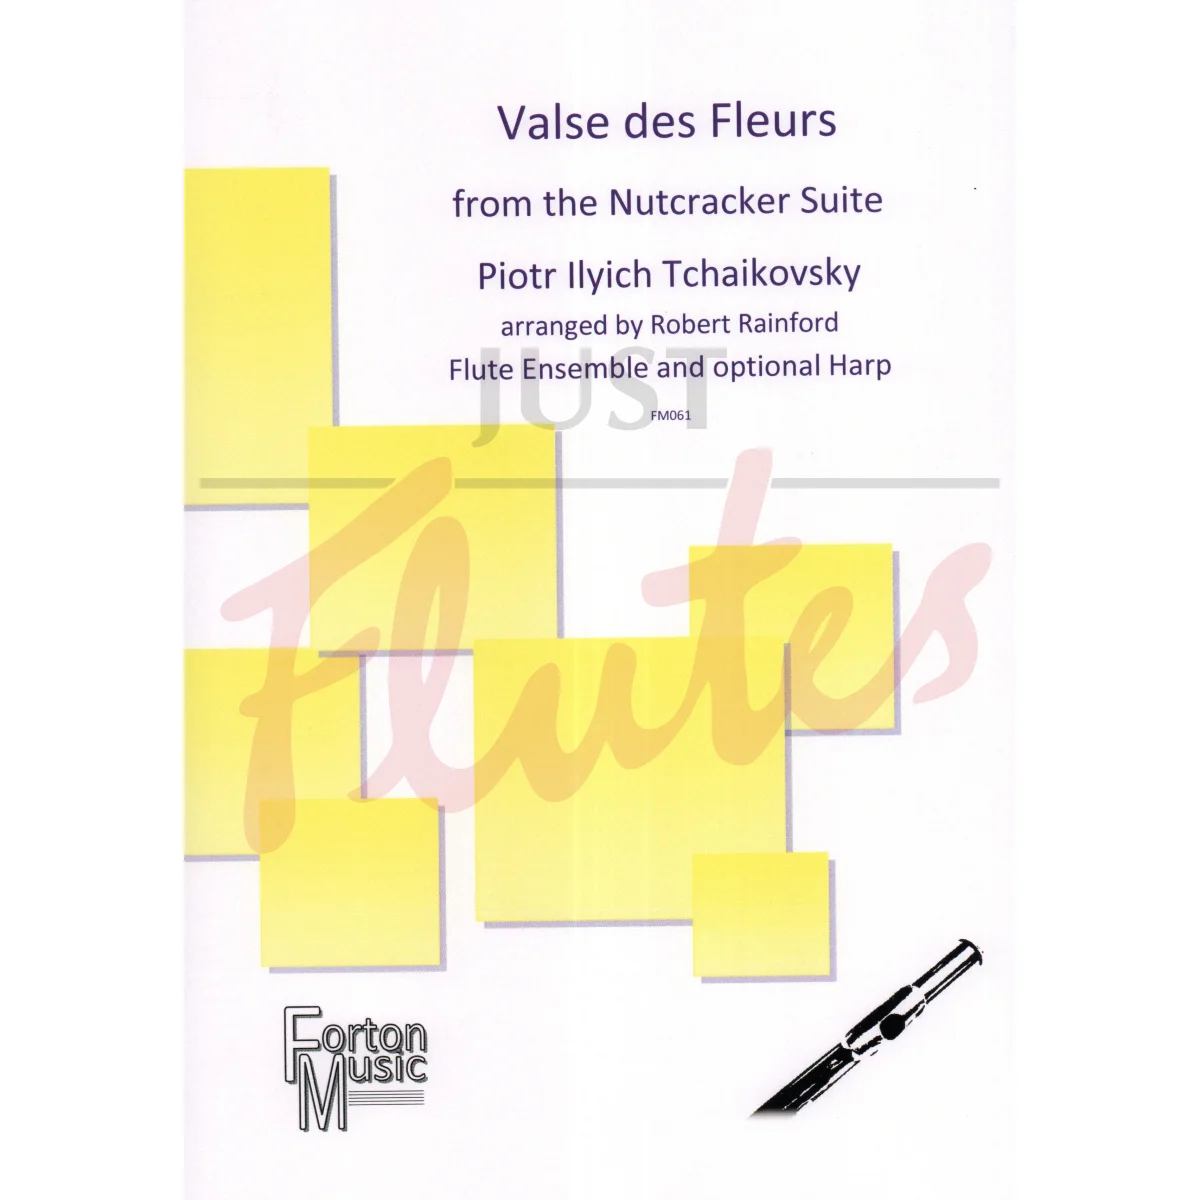 Valse des Fleurs from the Nutcracker Suite for Flute Choir and optional Harp